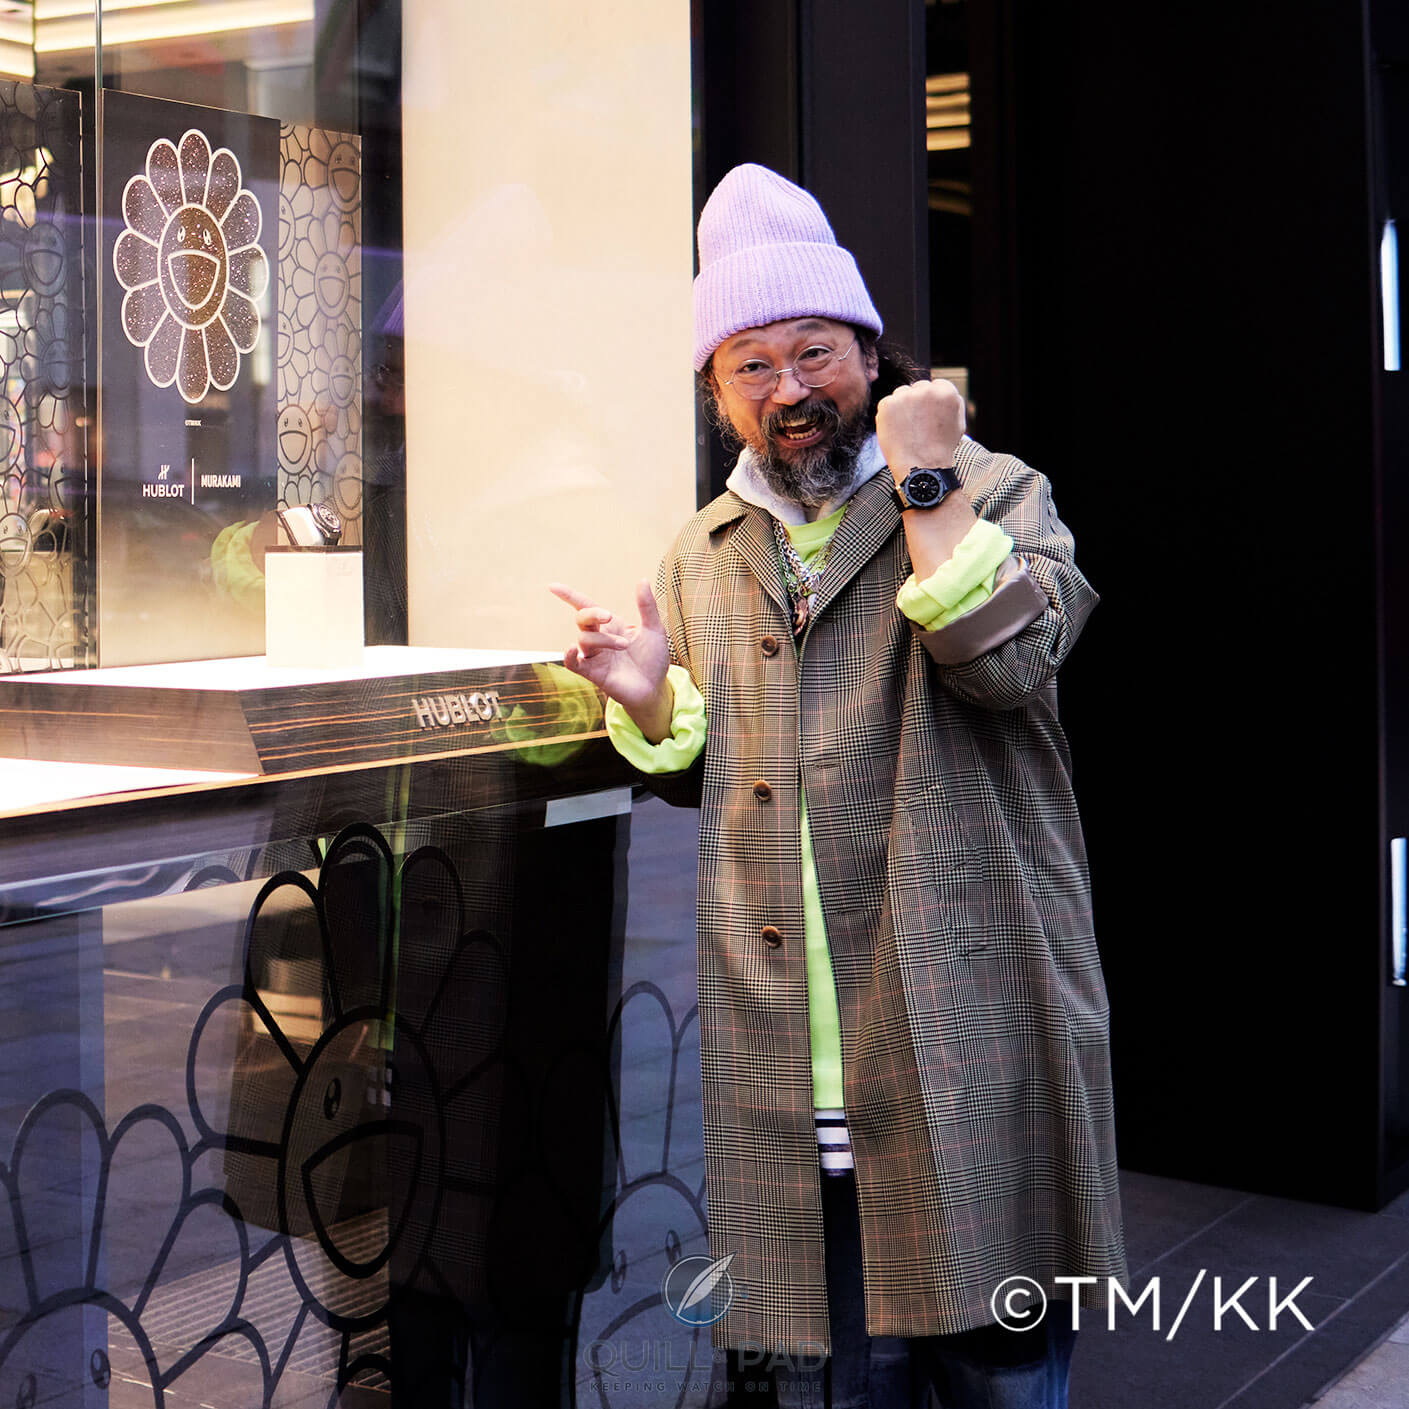 Takashi Murakami flower smiles on limited edition Hublot watch - LVMH